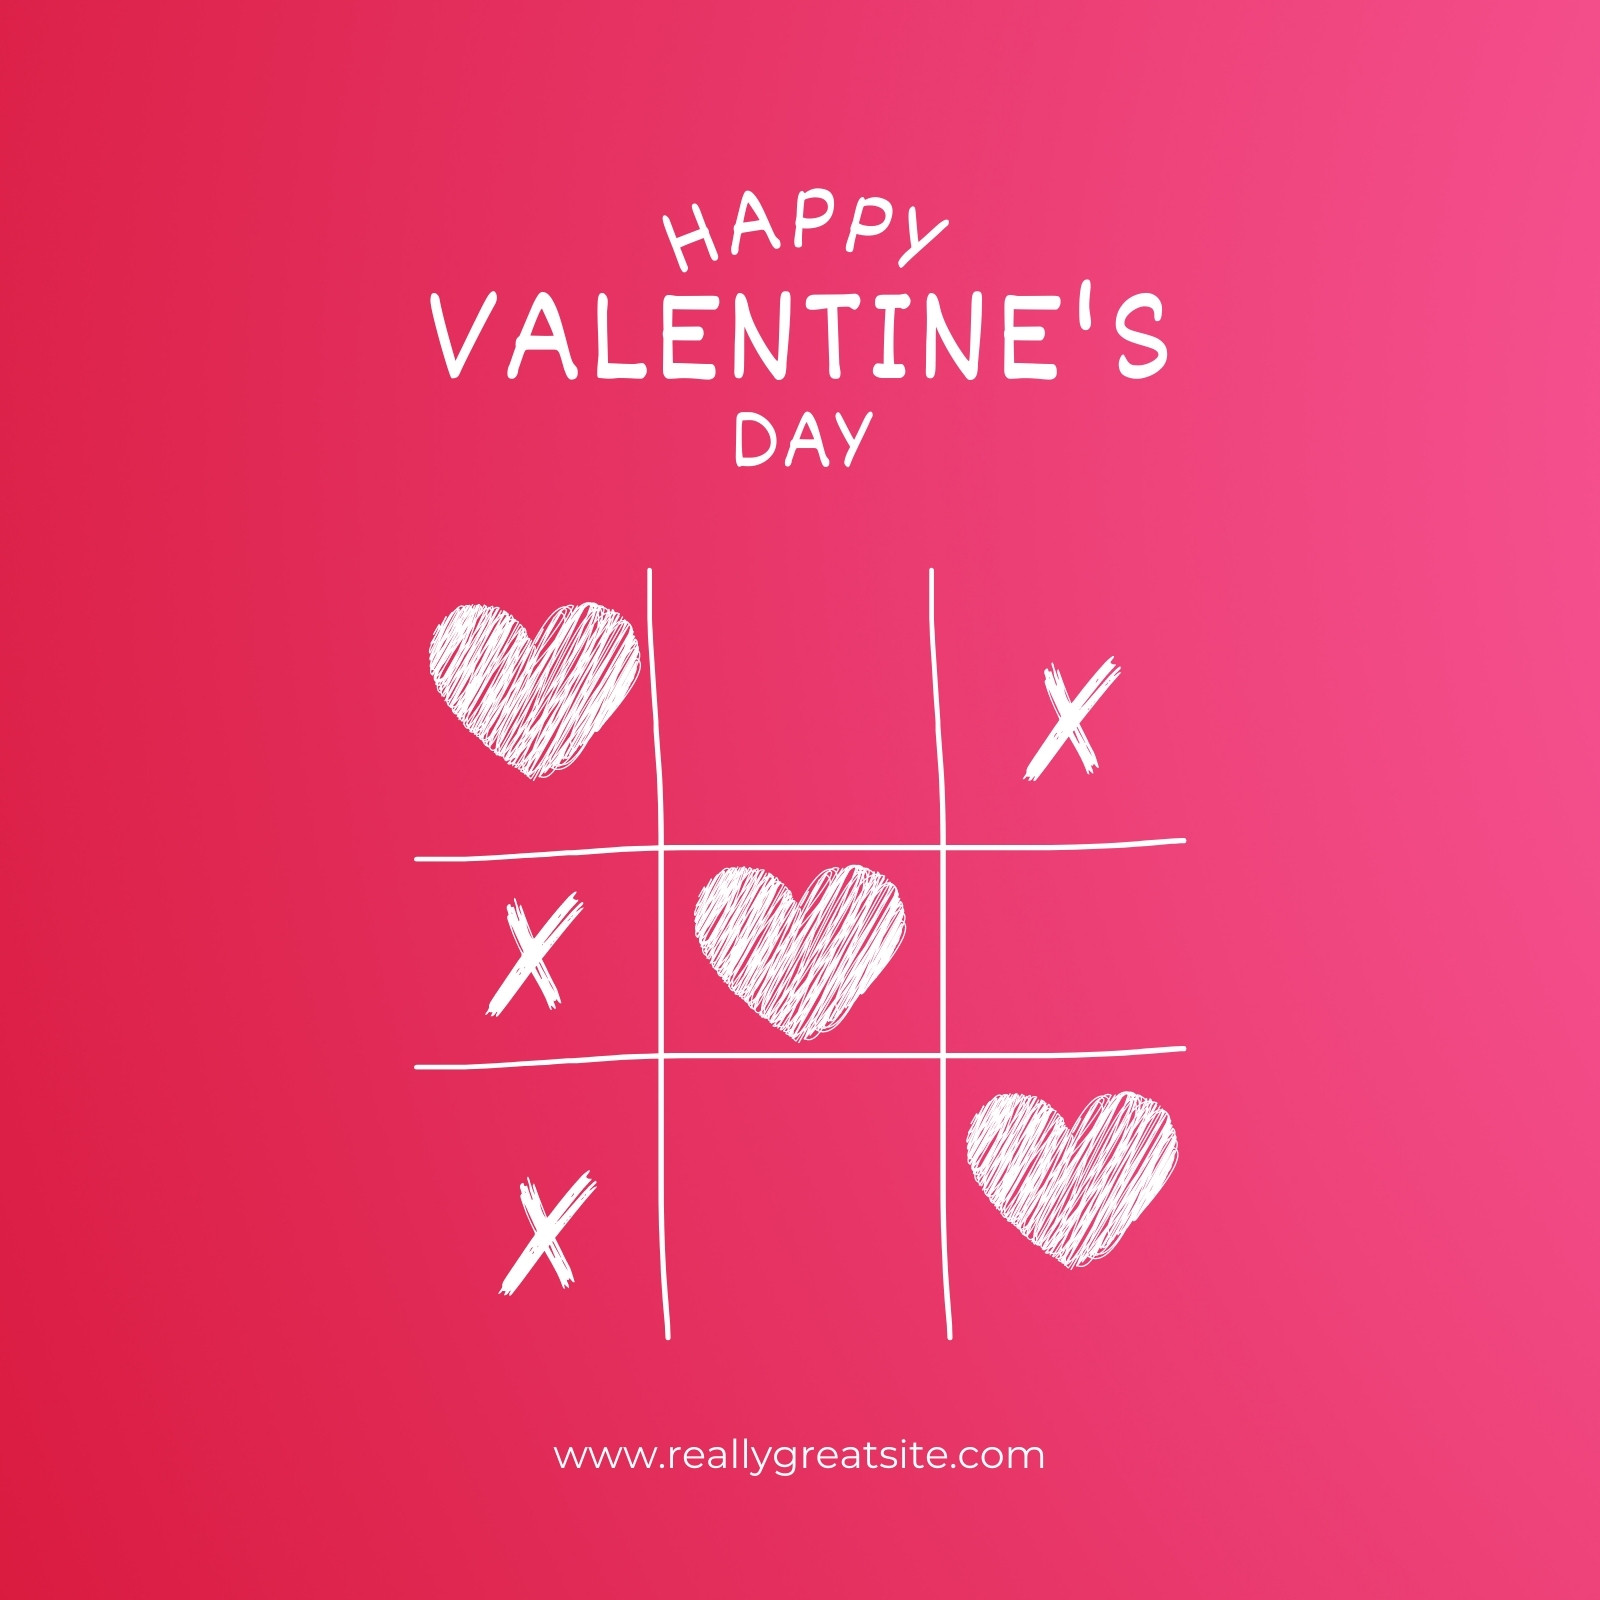 Free Valentine's Day animated social media templates | Canva